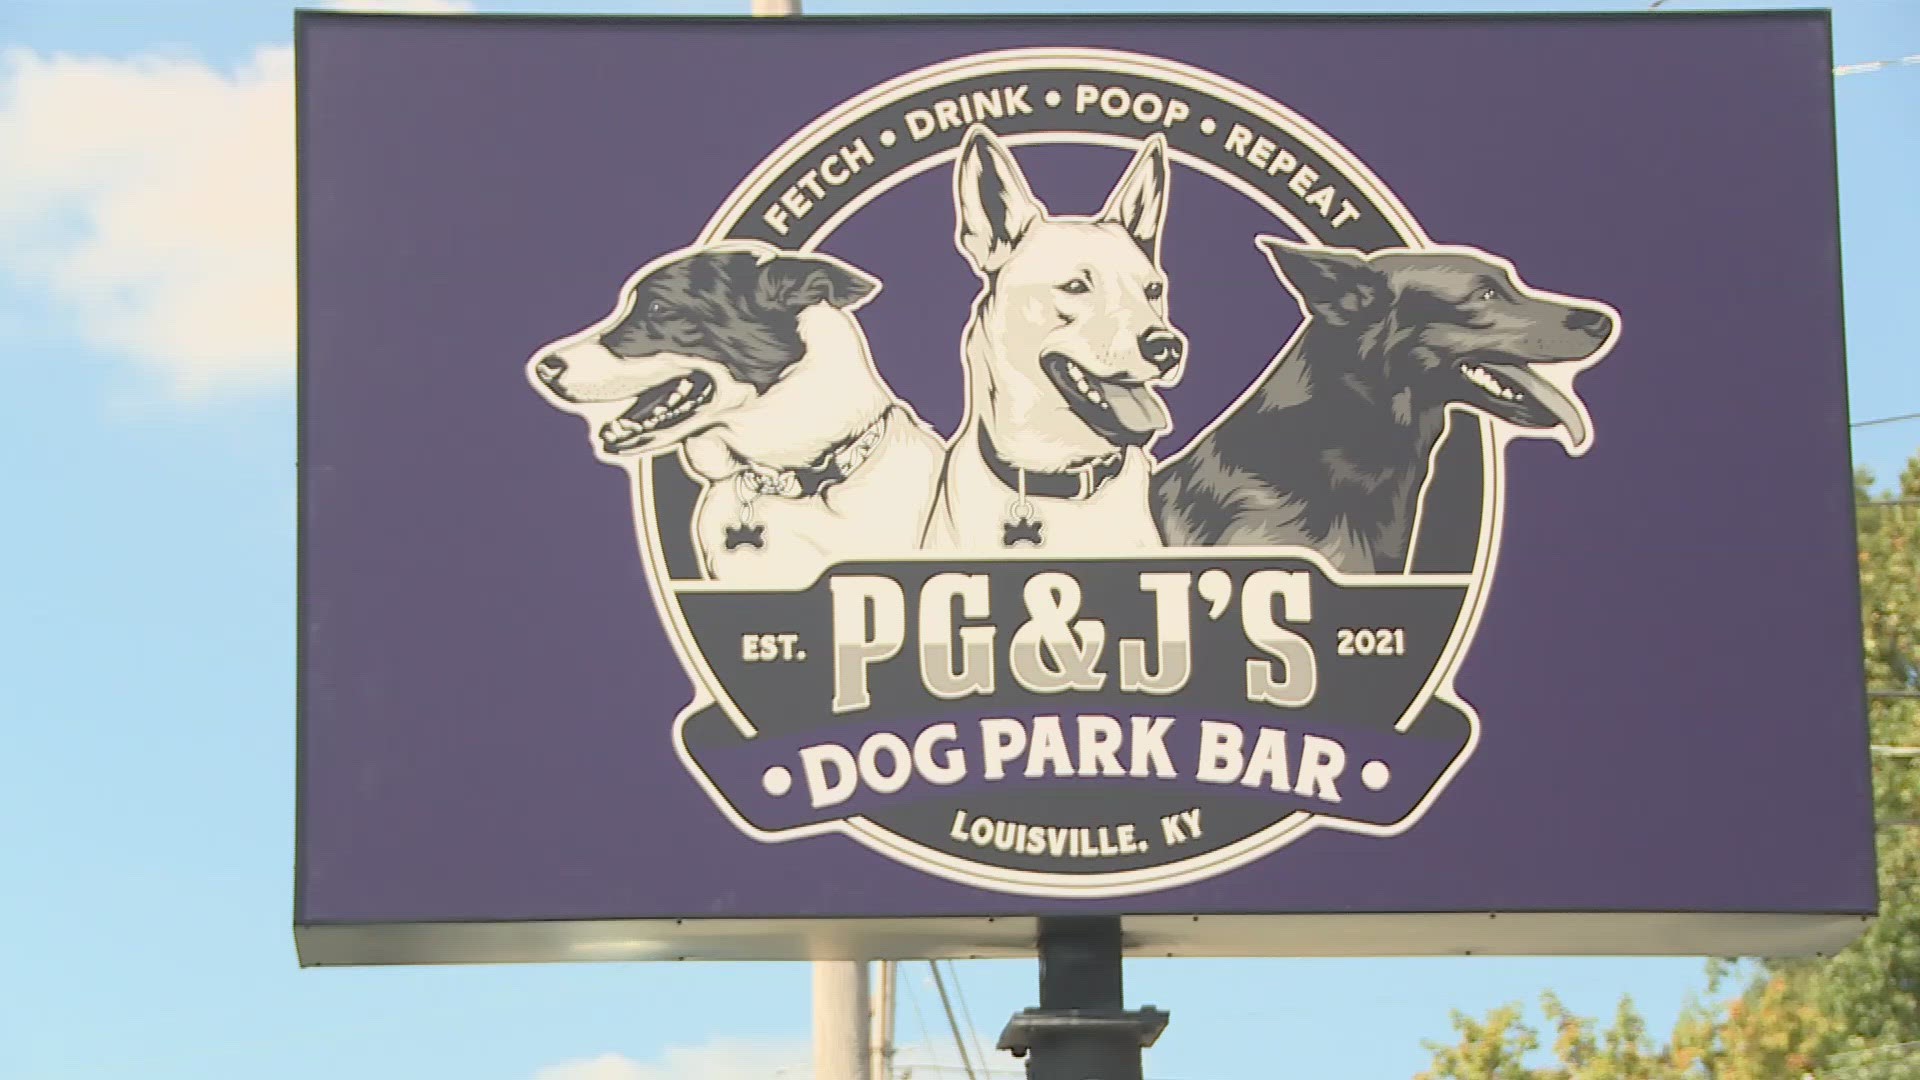 Louisville Dog Park now open, News